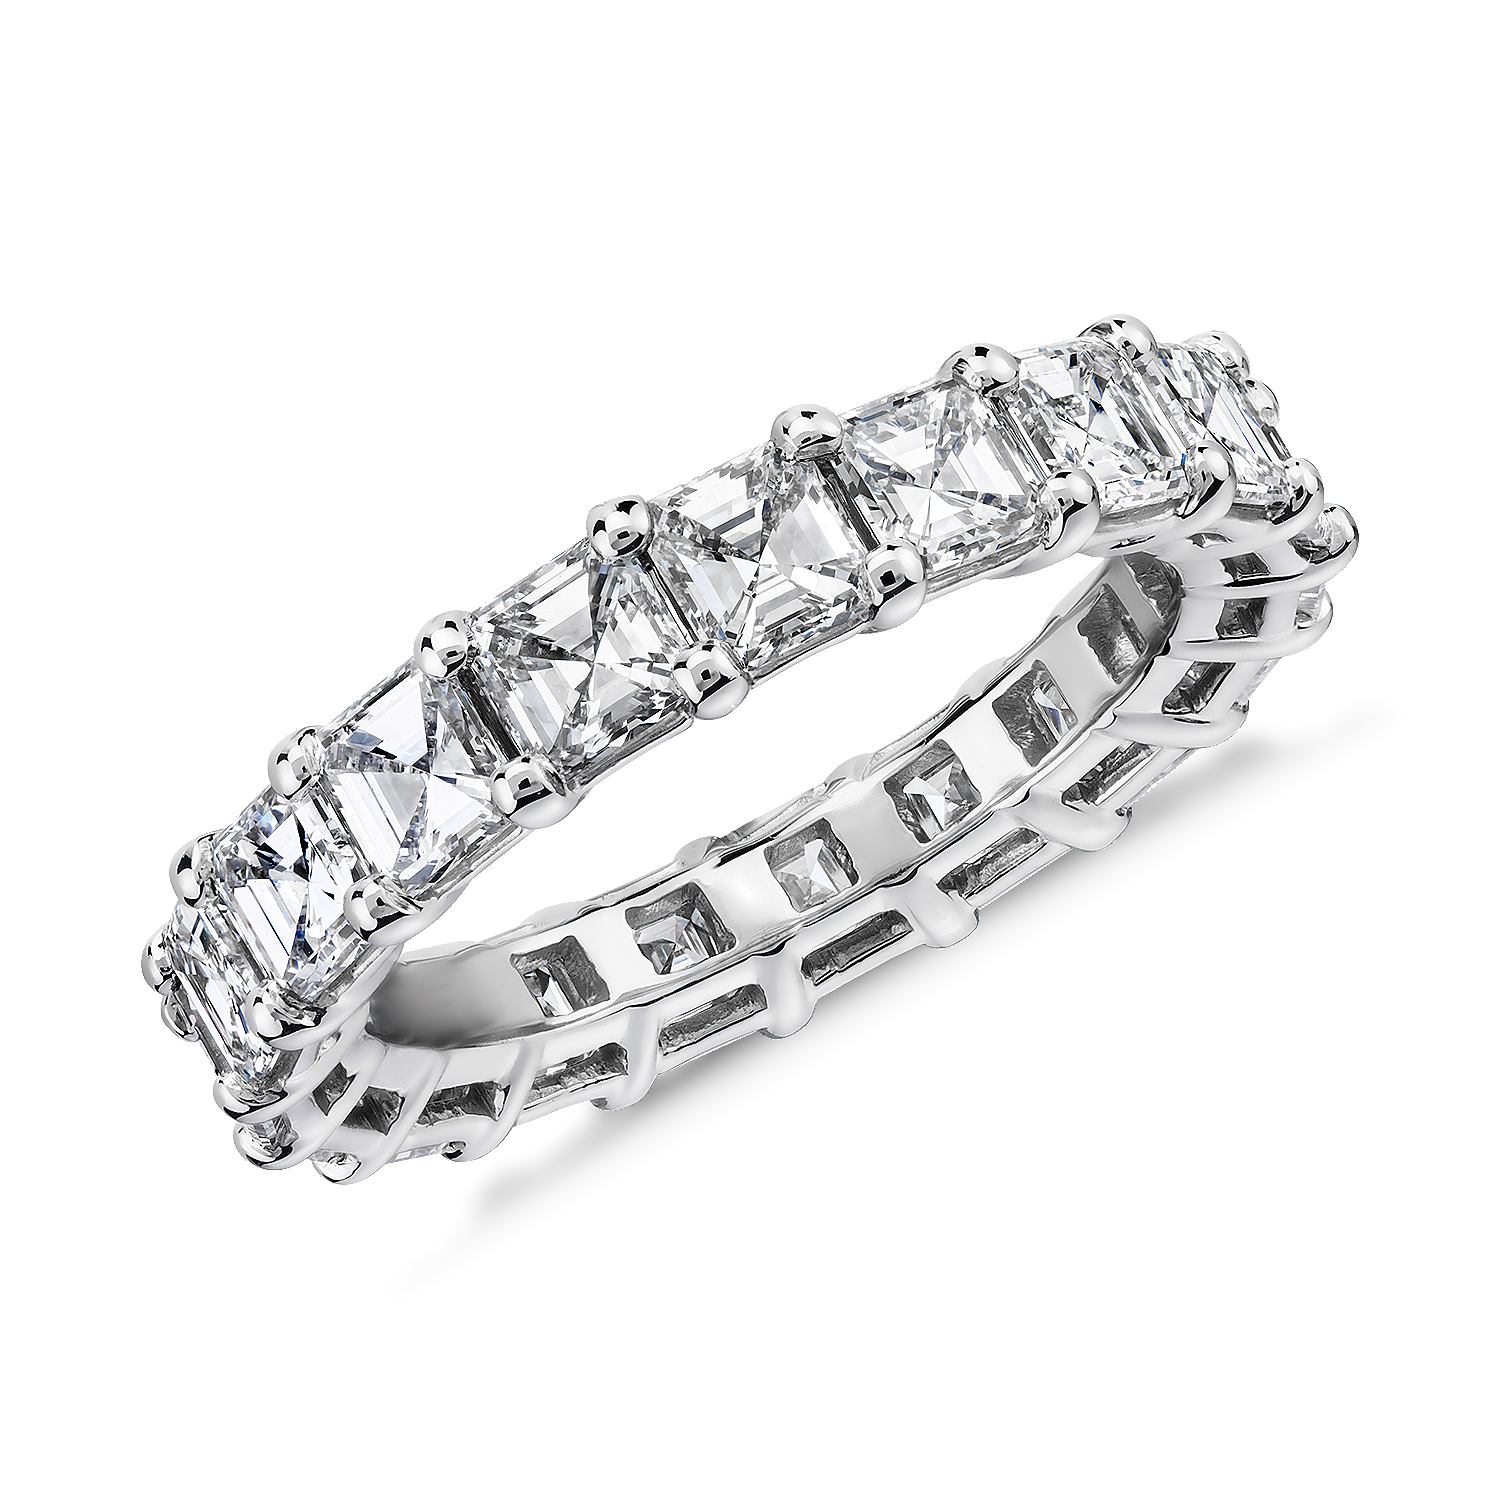 Asscher Cut Diamond Eternity Ring in Platinum (4.0 ct. tw.)